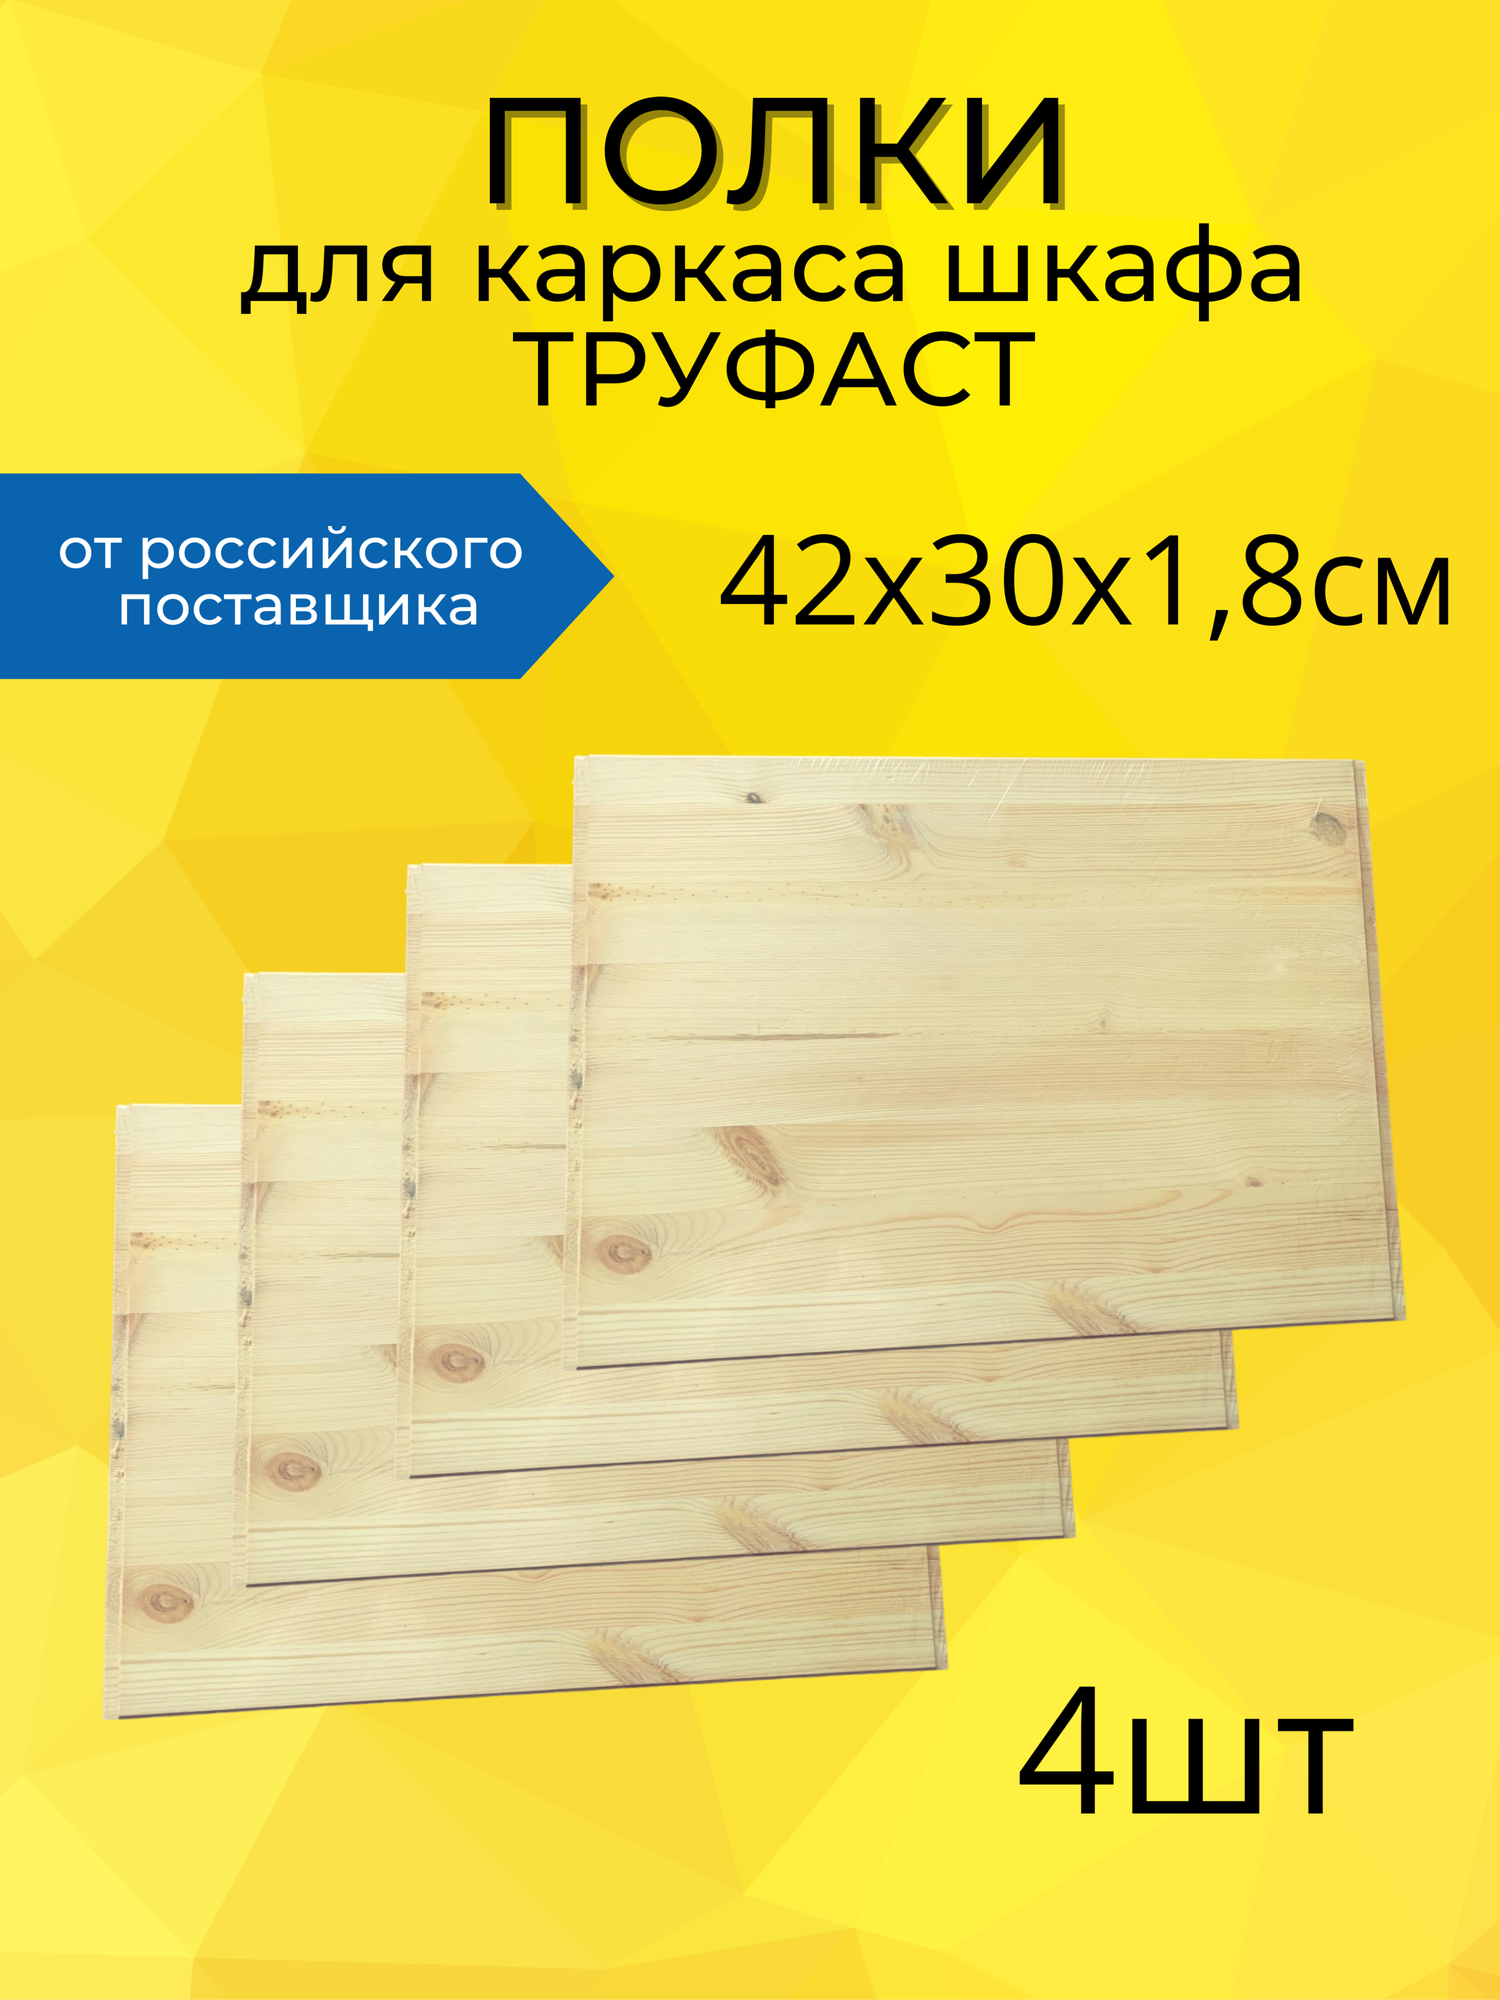 Полка деревянная для каркаса шкафа Труфаст 42х30х1.8 см 4 шт